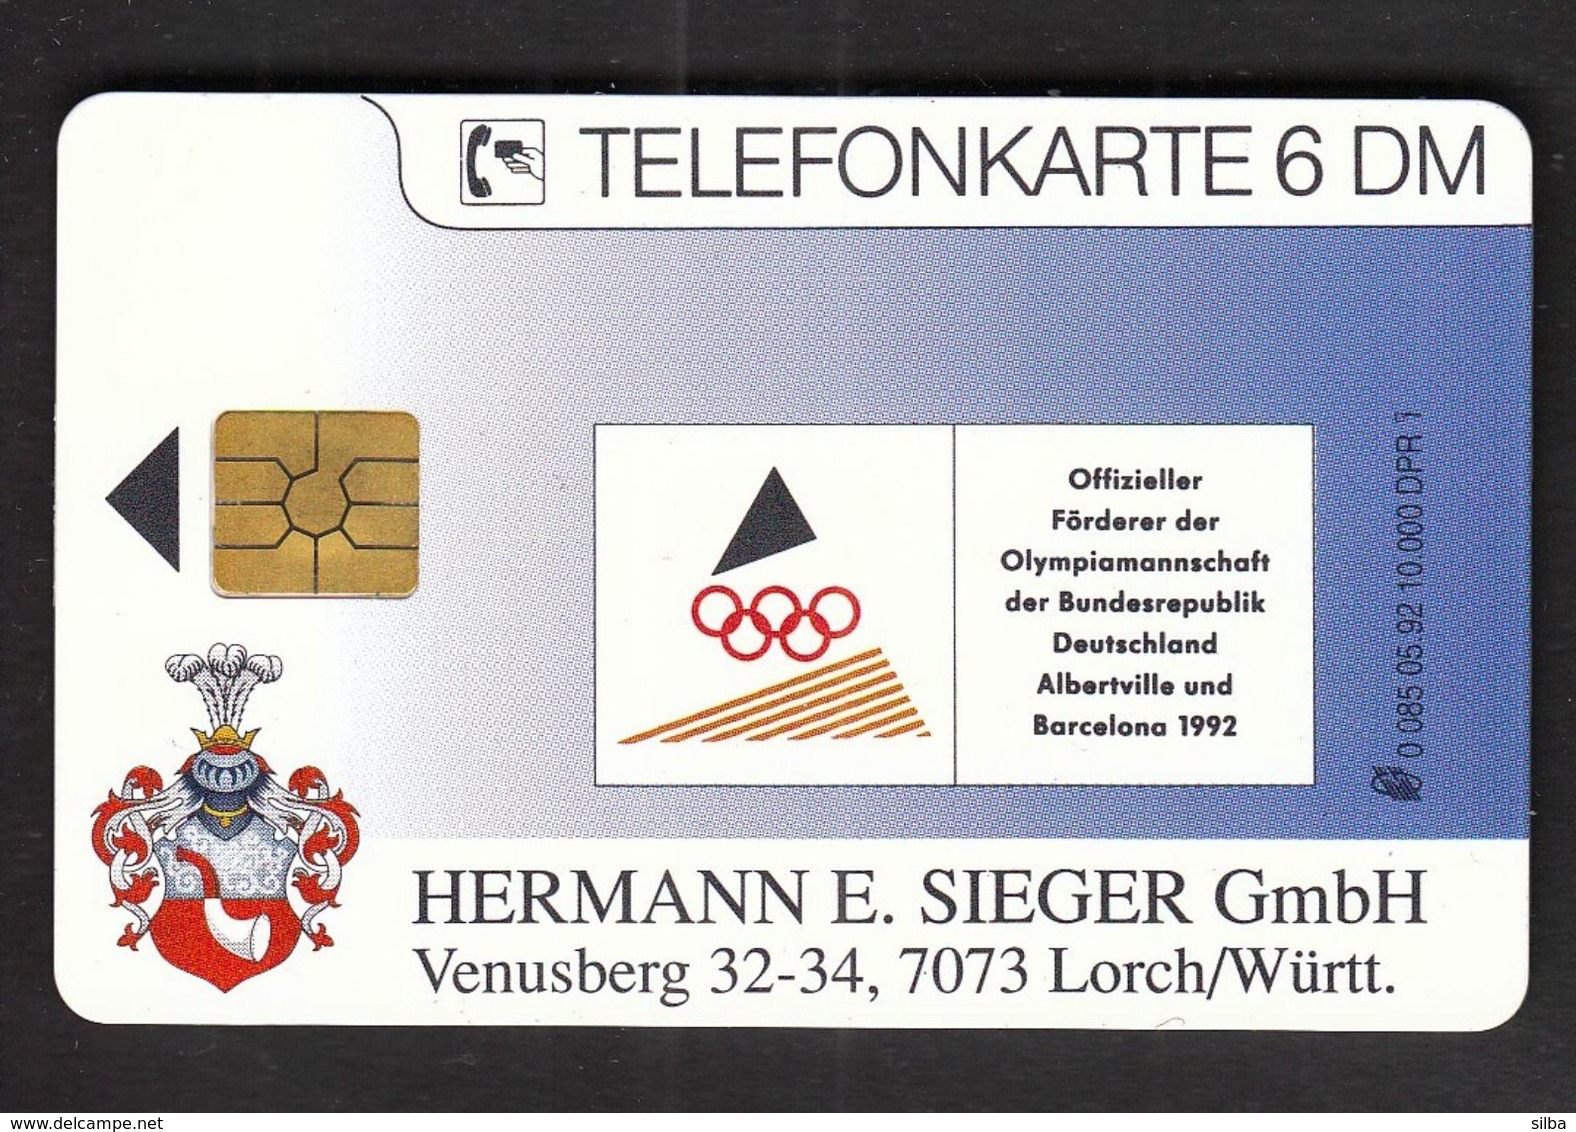 Germany 1992 / Olympic Games Tokyo 1964 / Josef Neckermann,Gold Medal / Equestrian Dressage / Phonecard - Juegos Olímpicos